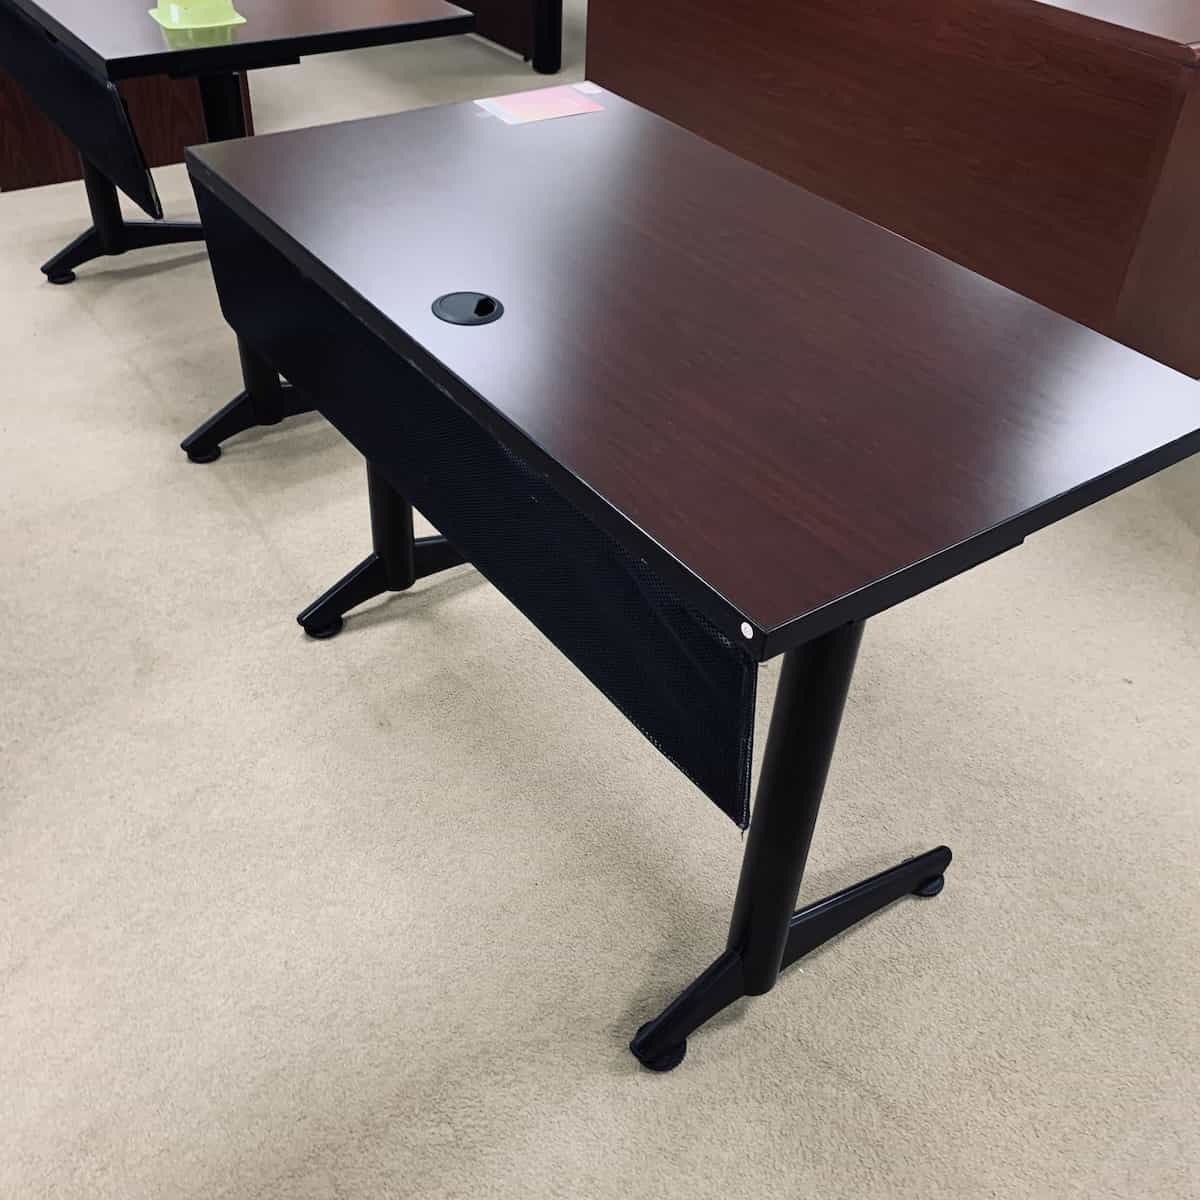 mahogany-black-student-desk-with-mesh-cord-management-back